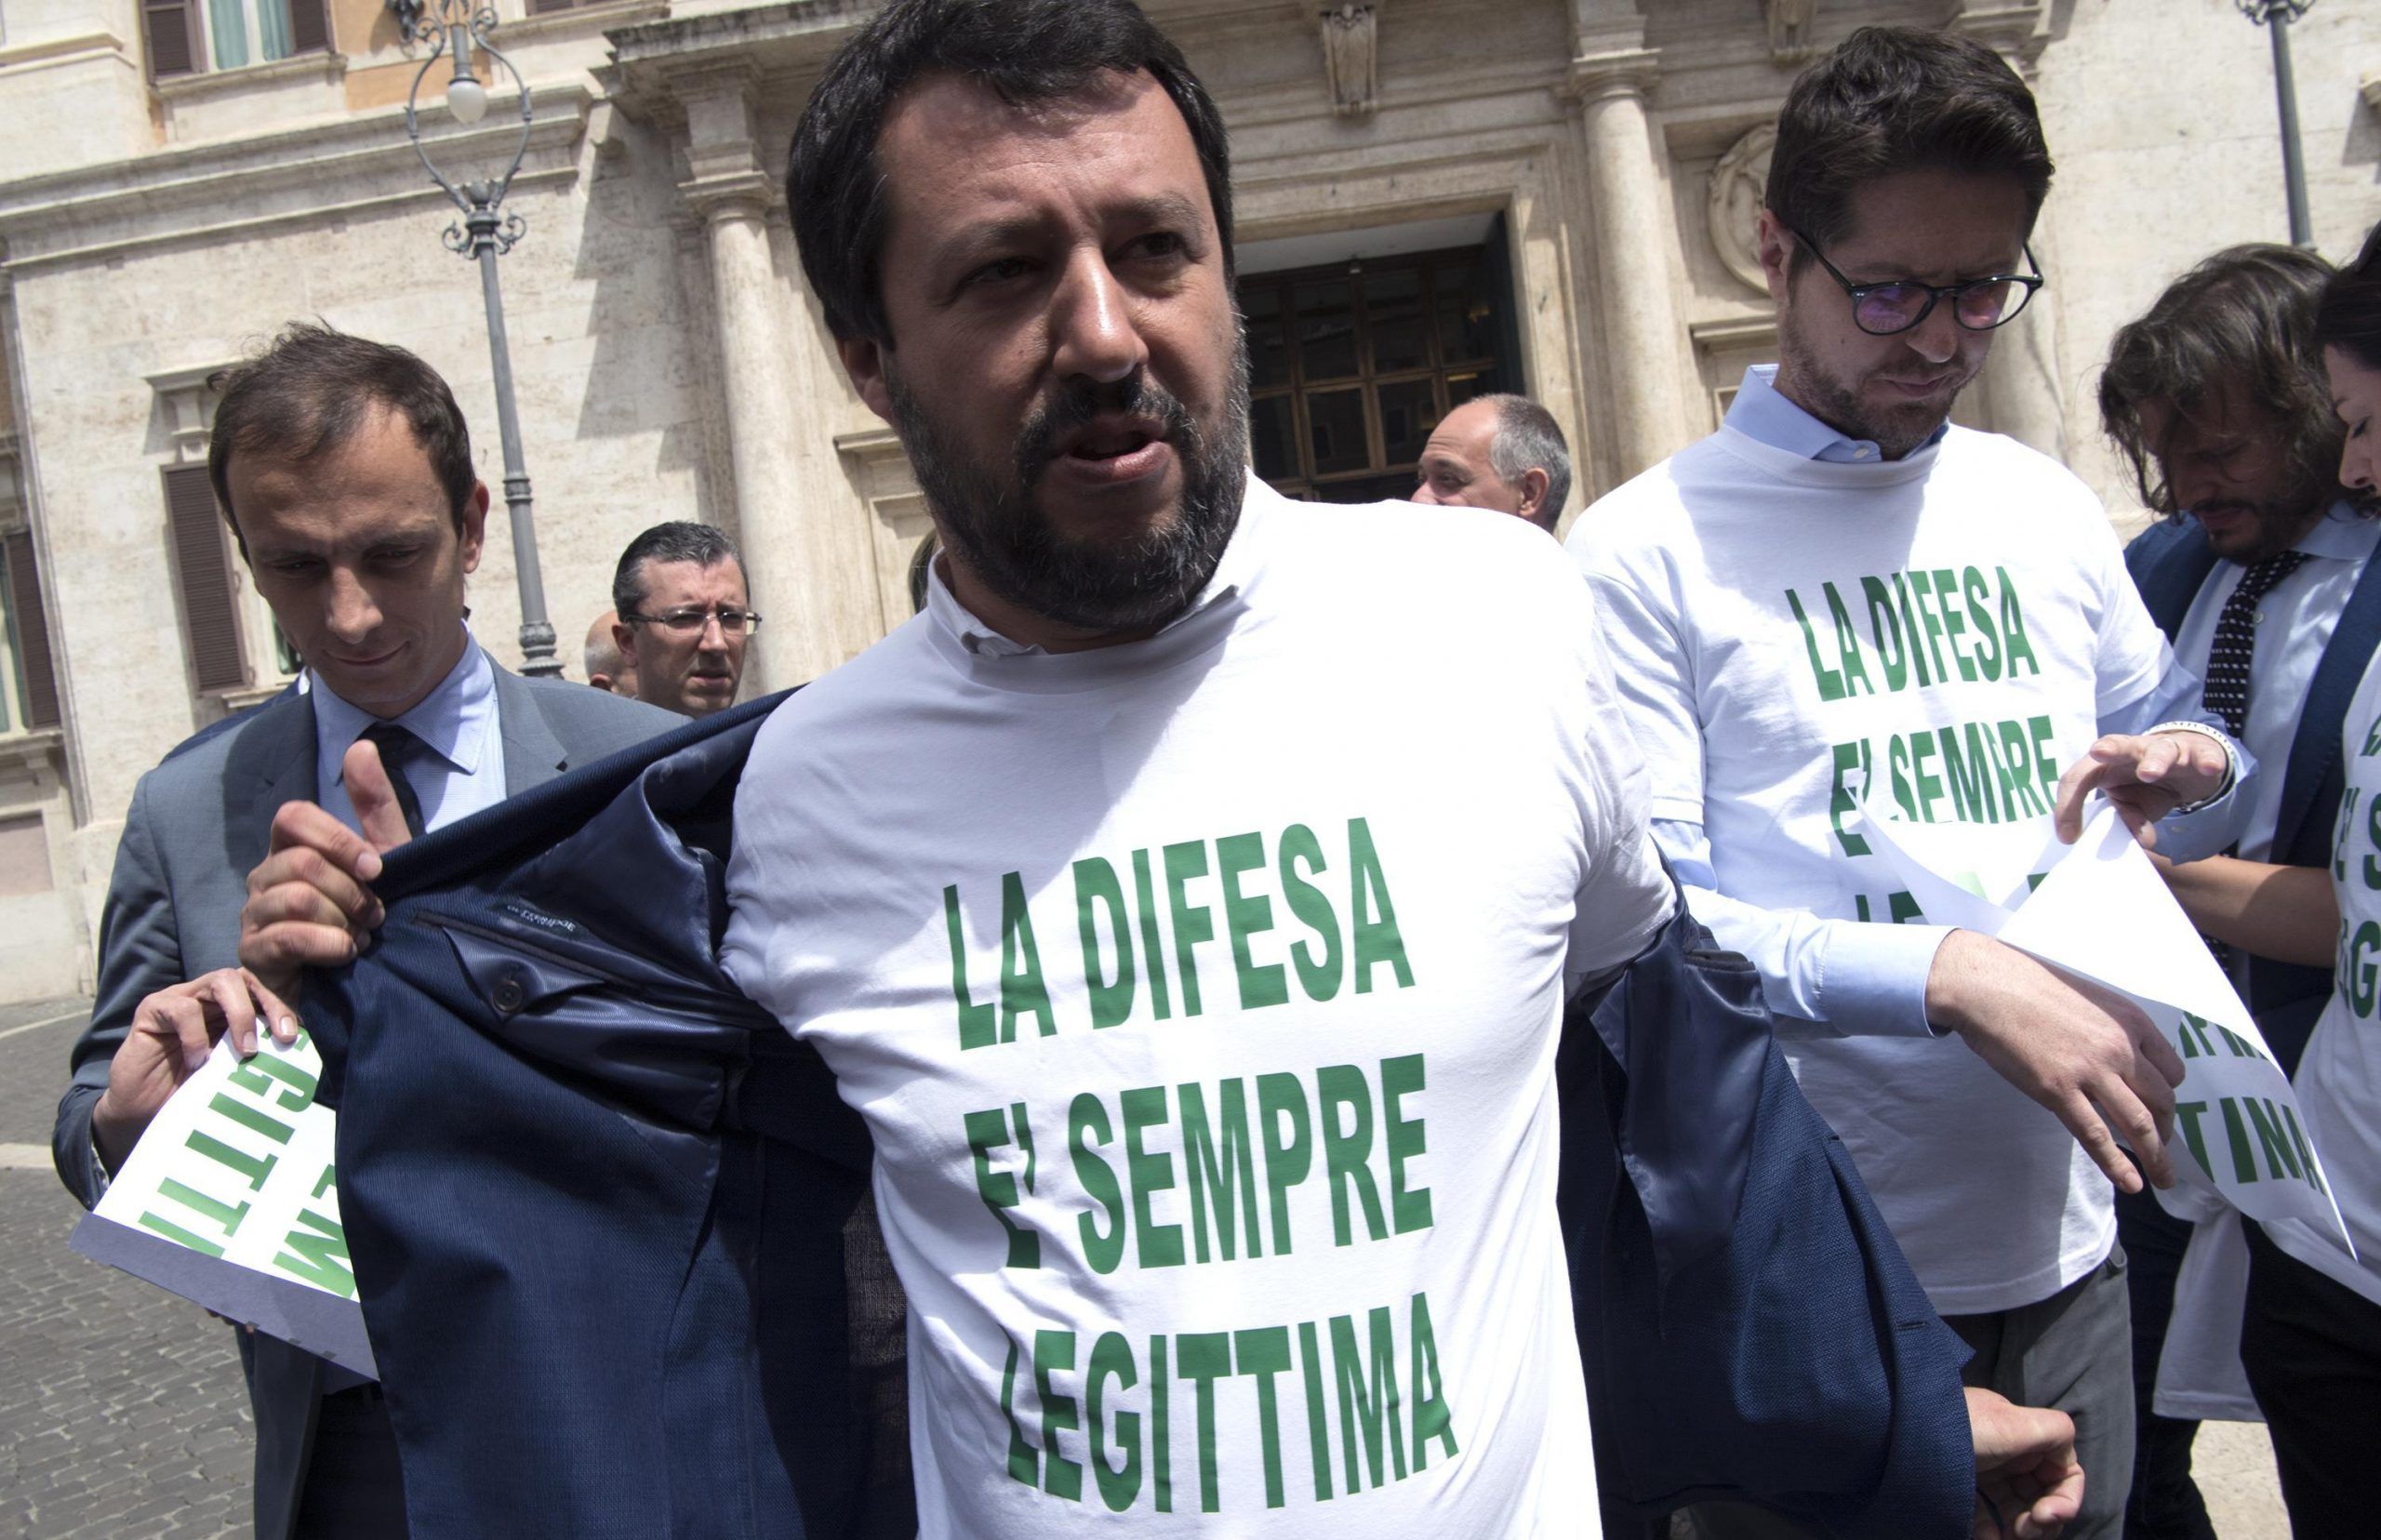 Legittima difesa: Salvini, affronto da governo clandestino